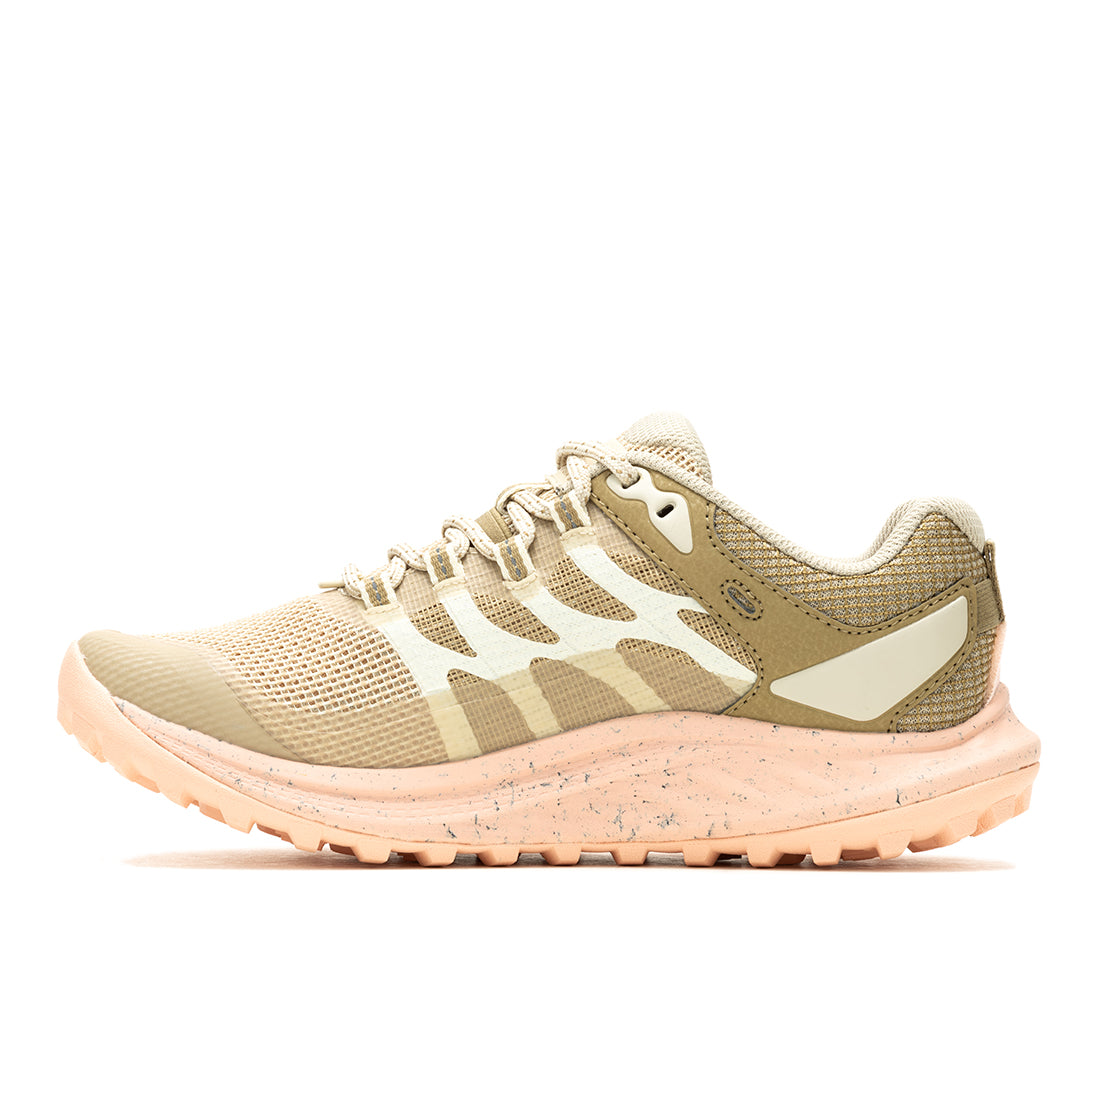 Merrell Antora 3 – Cream/Peach Womens Trail Running Shoes